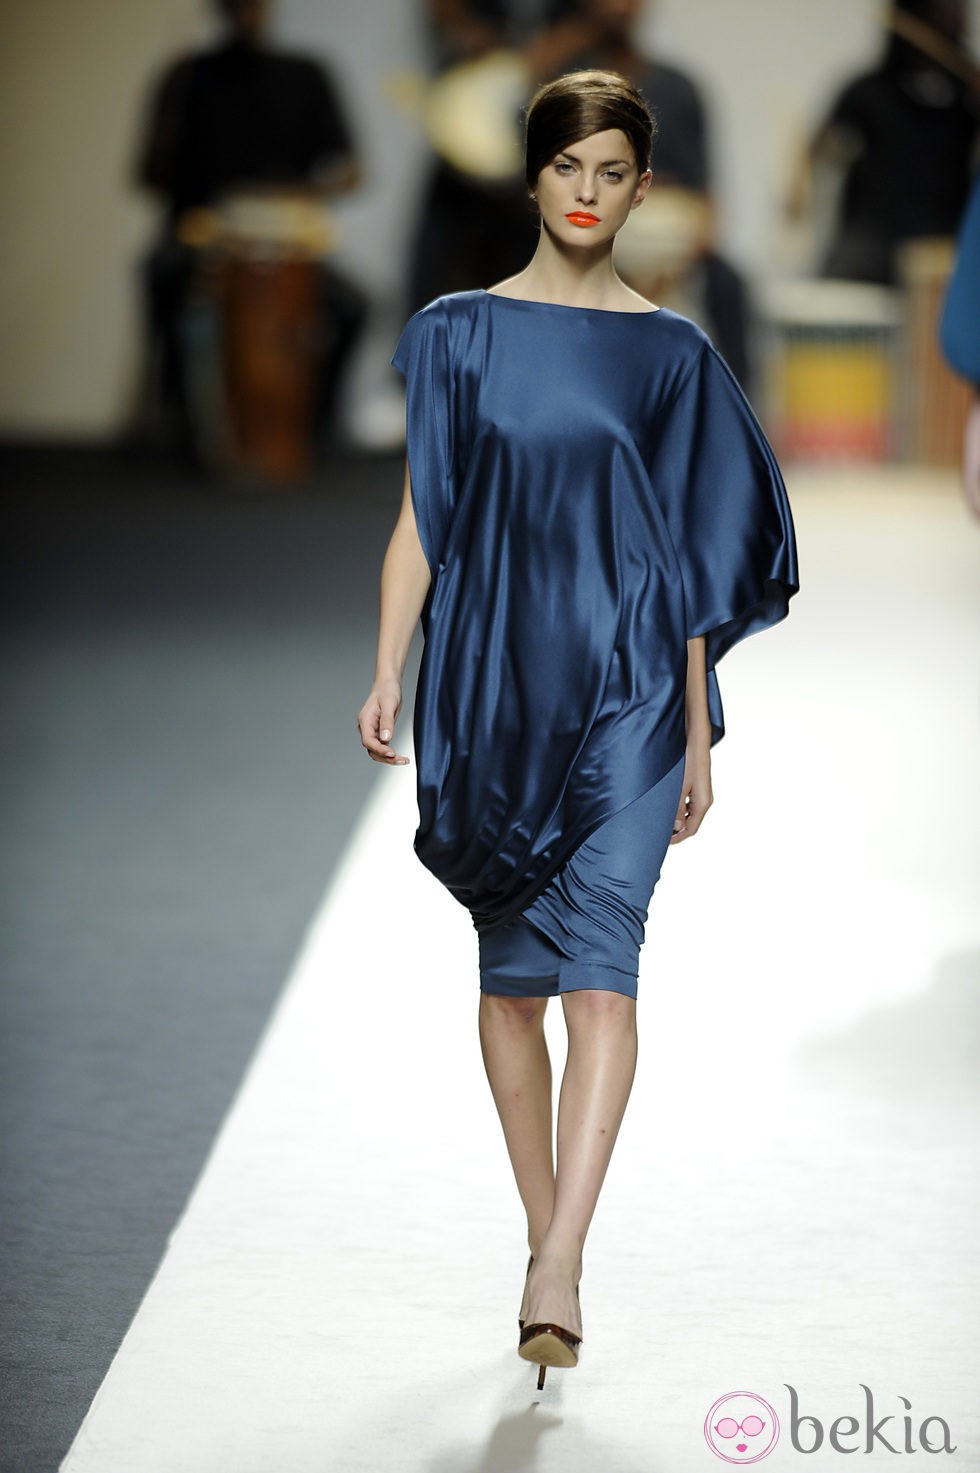 Vestido azul oscuro de Duyos para primavera 2012 en Cibeles 2011